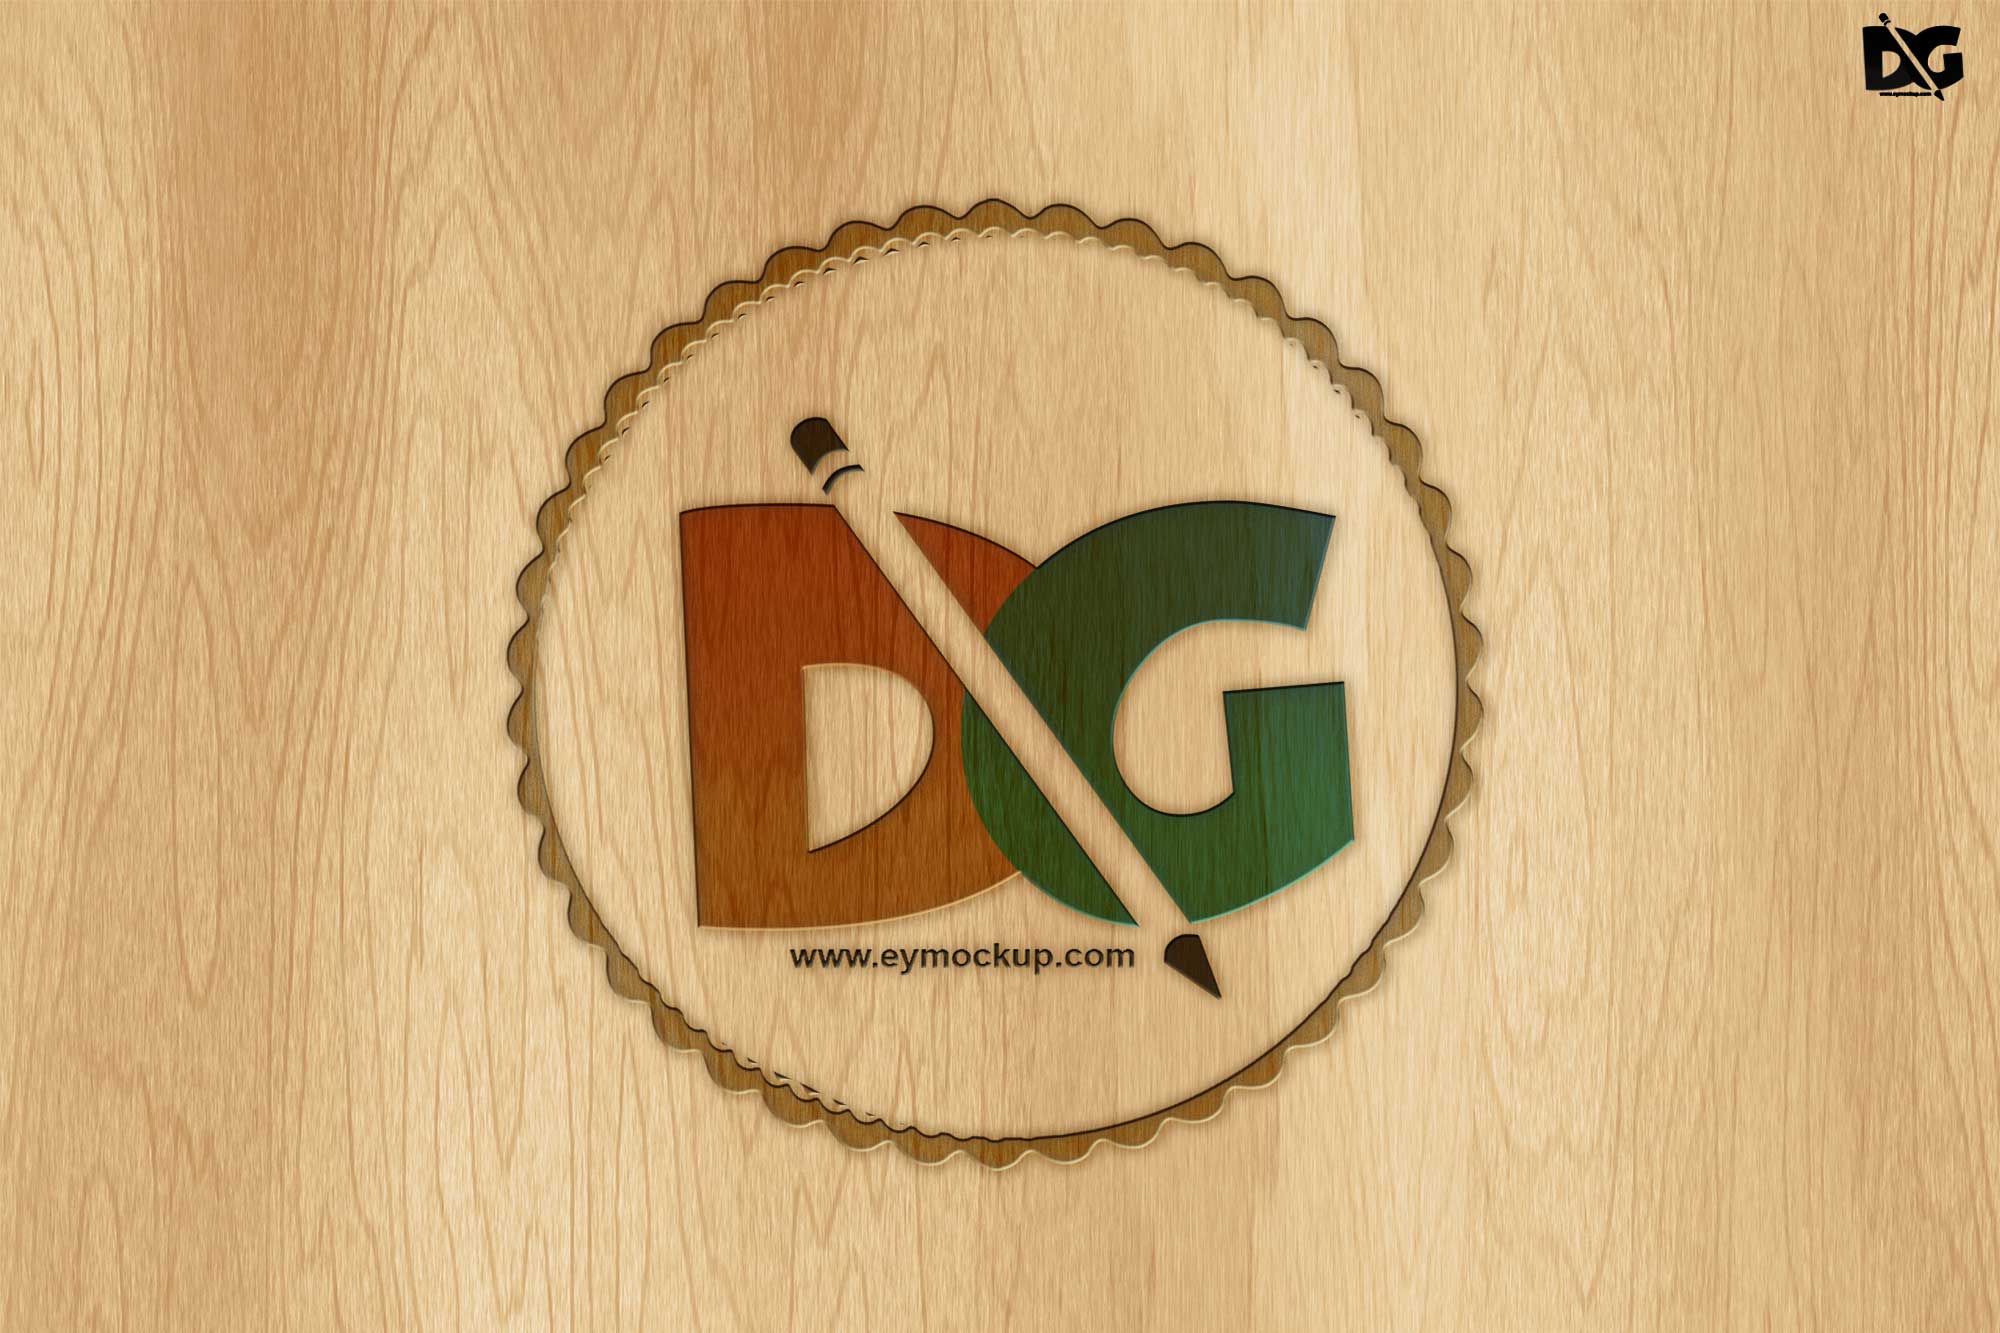 Logo PSD